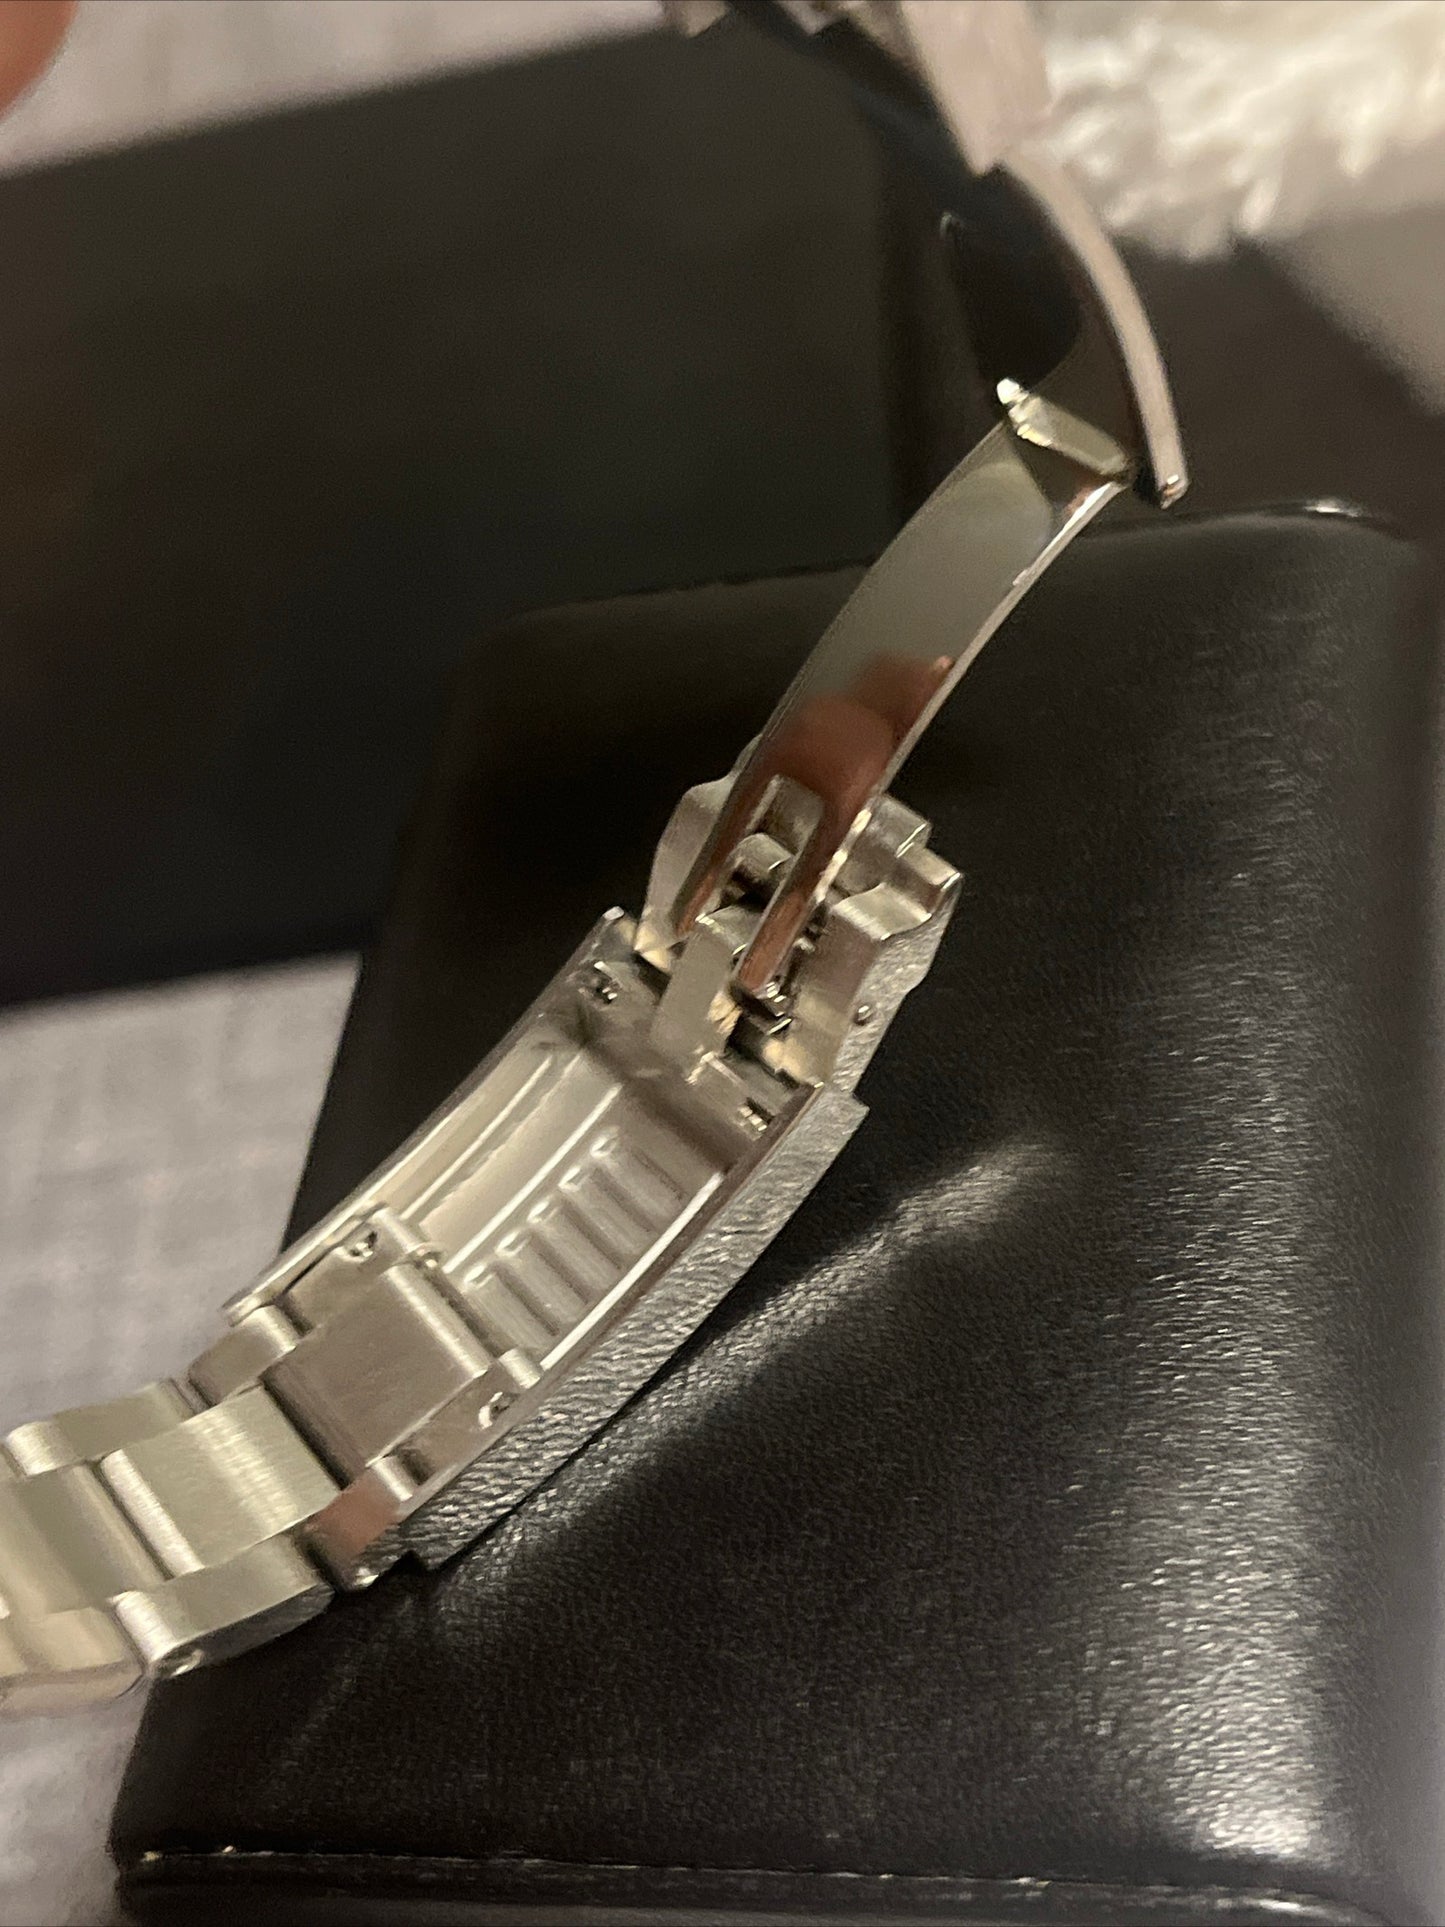 Seiko mod - Custom build pepsi GMT automatic watch (Jubilee/Oyster bracelet)